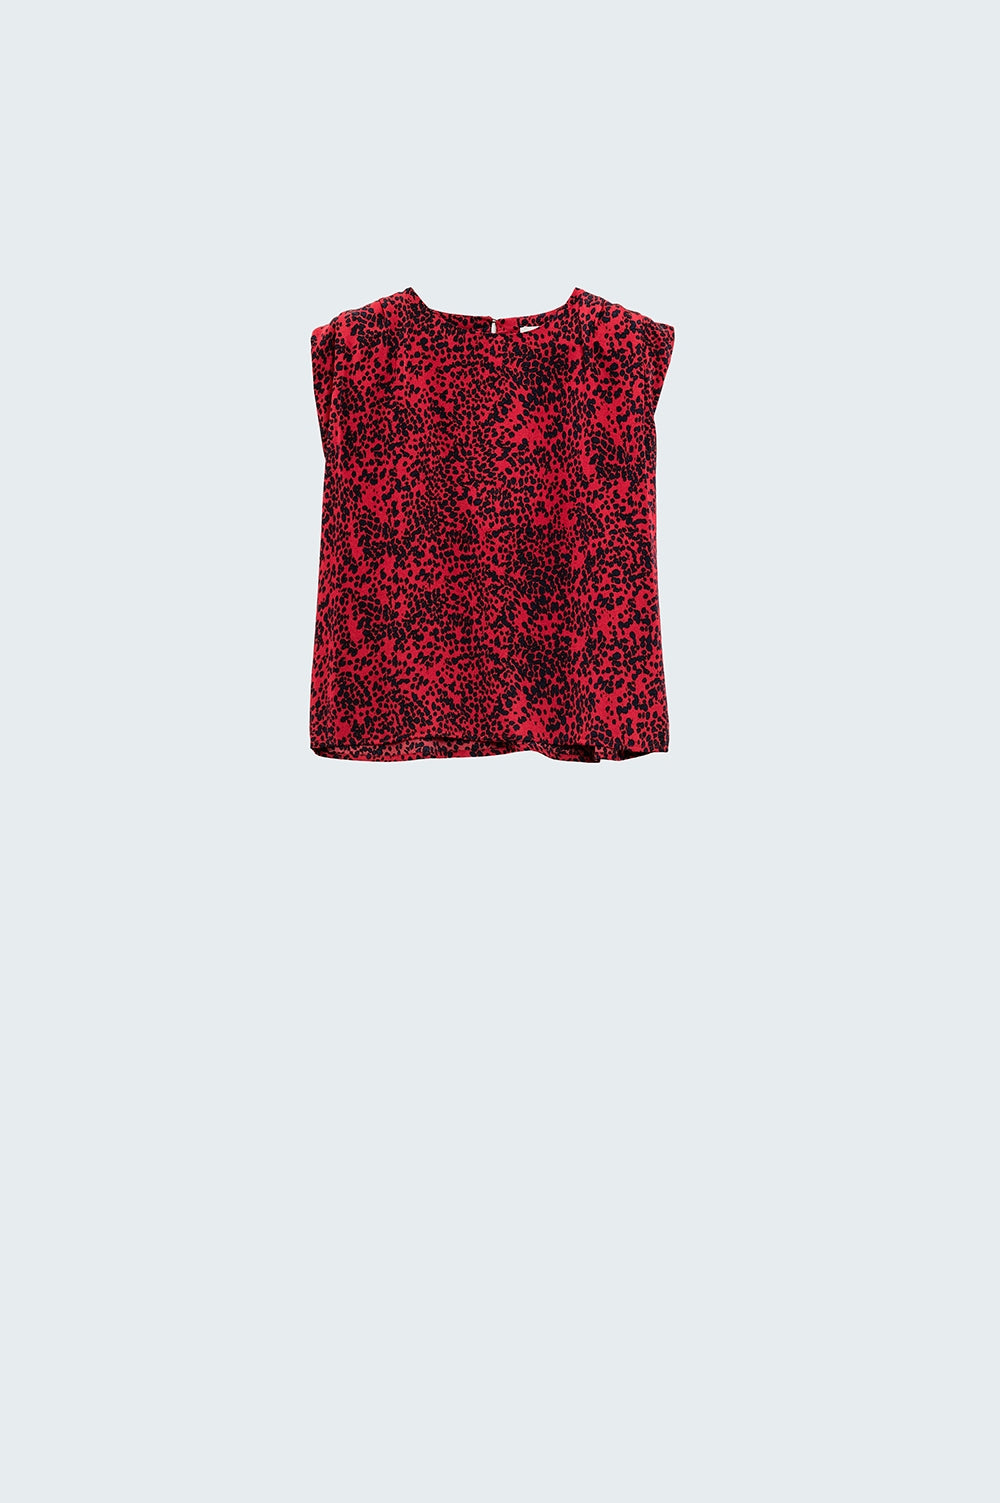 Q2 red satin sleeveless top with animal print